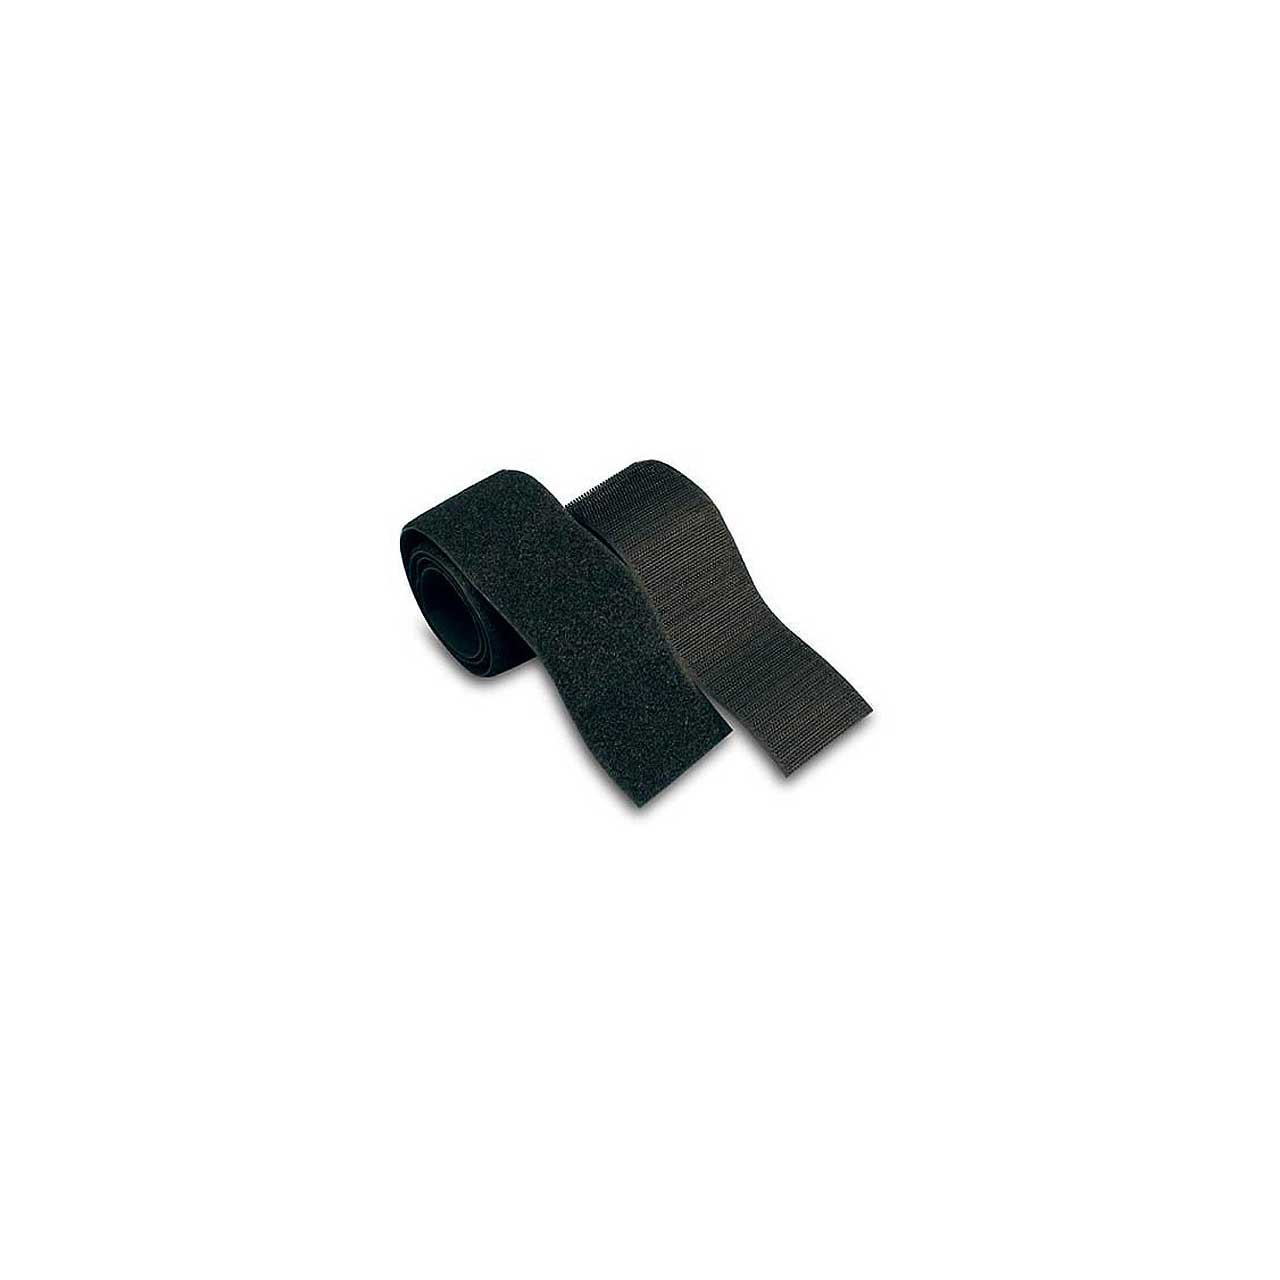 Velcro Brand Industrial Strength 4 x 2 Strips, 4 Sets, Black